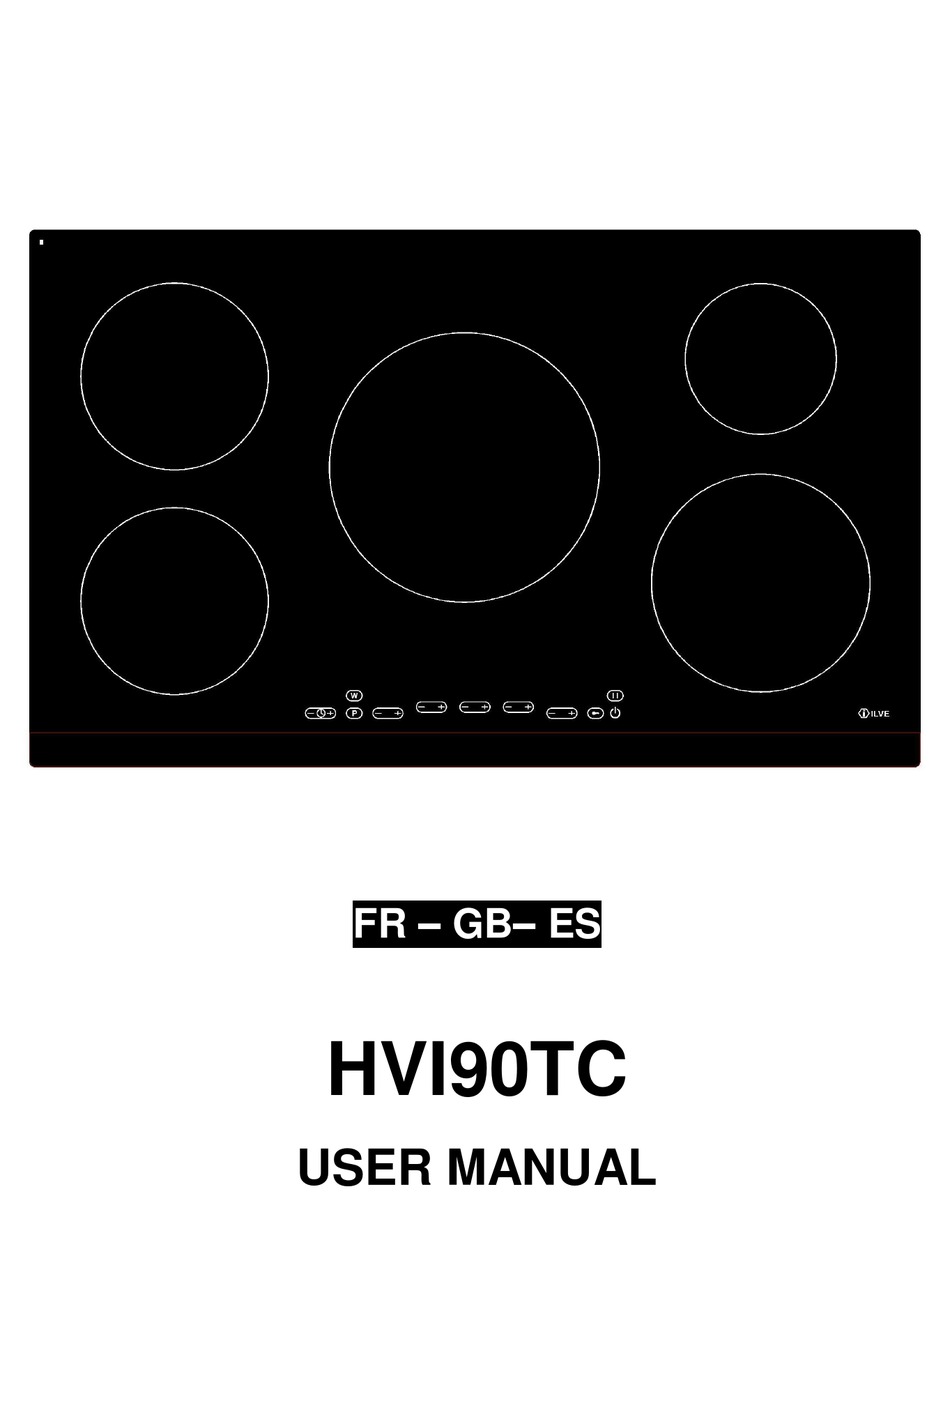 ilve-hvi90tc-user-manual-pdf-download-manualslib